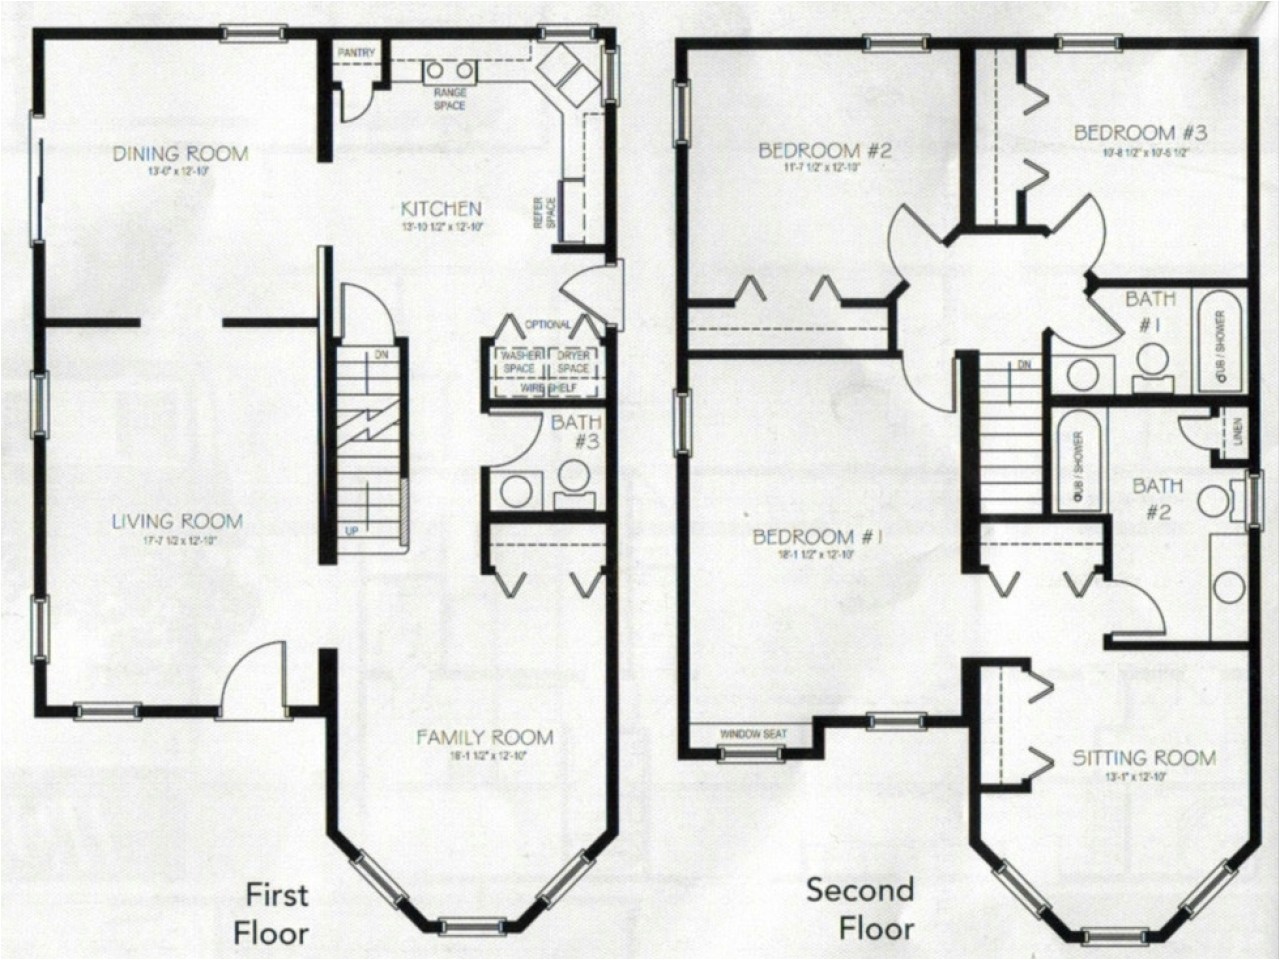 1c6e9d56762e4595 4 bedroom 2 story house plans 2 story master bedroom